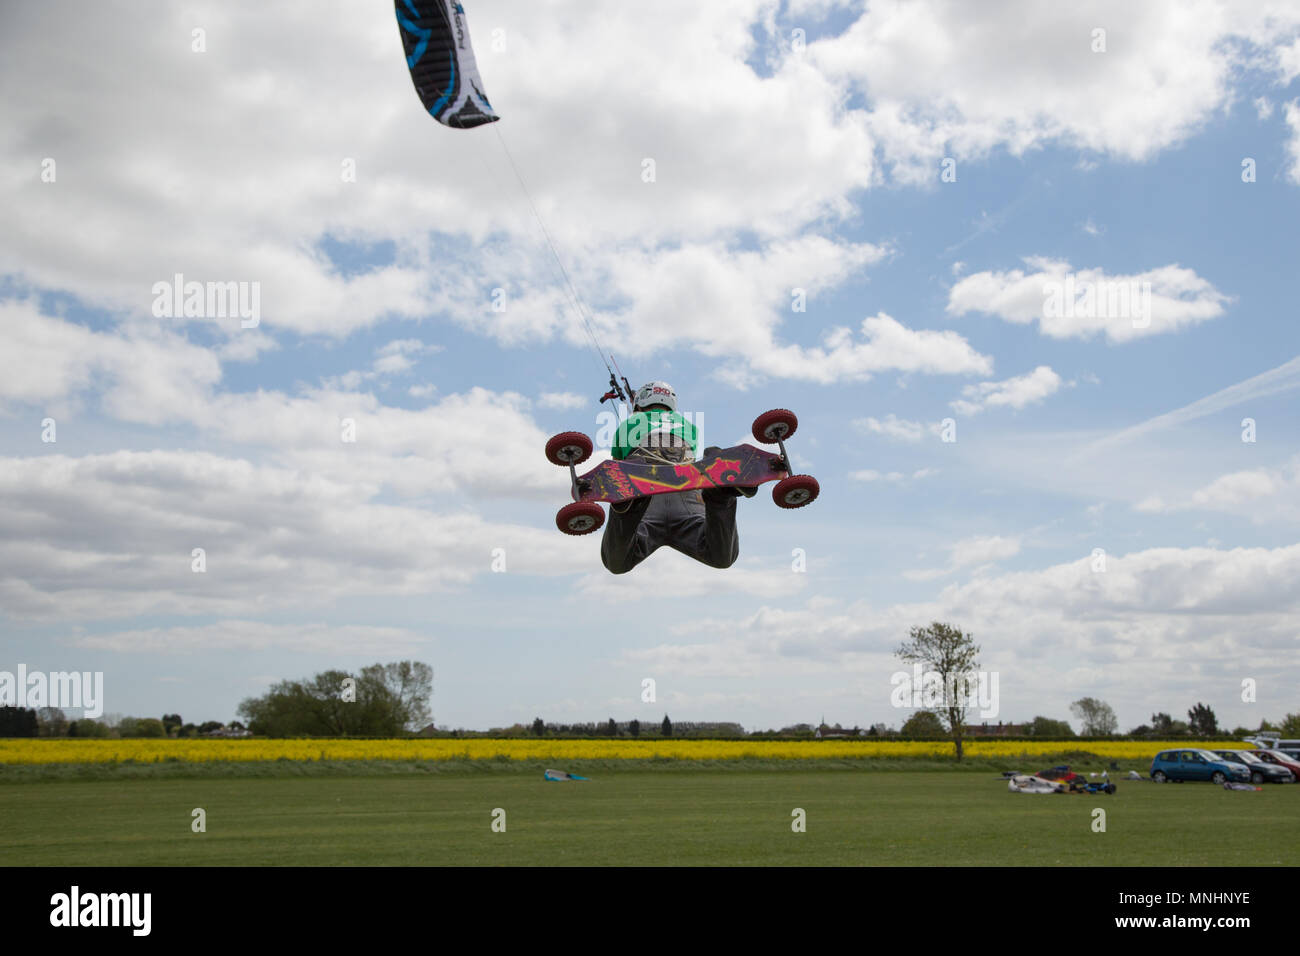 Extreme sport kite landboarding in Essex, UK. Going airborne. Stock Photo